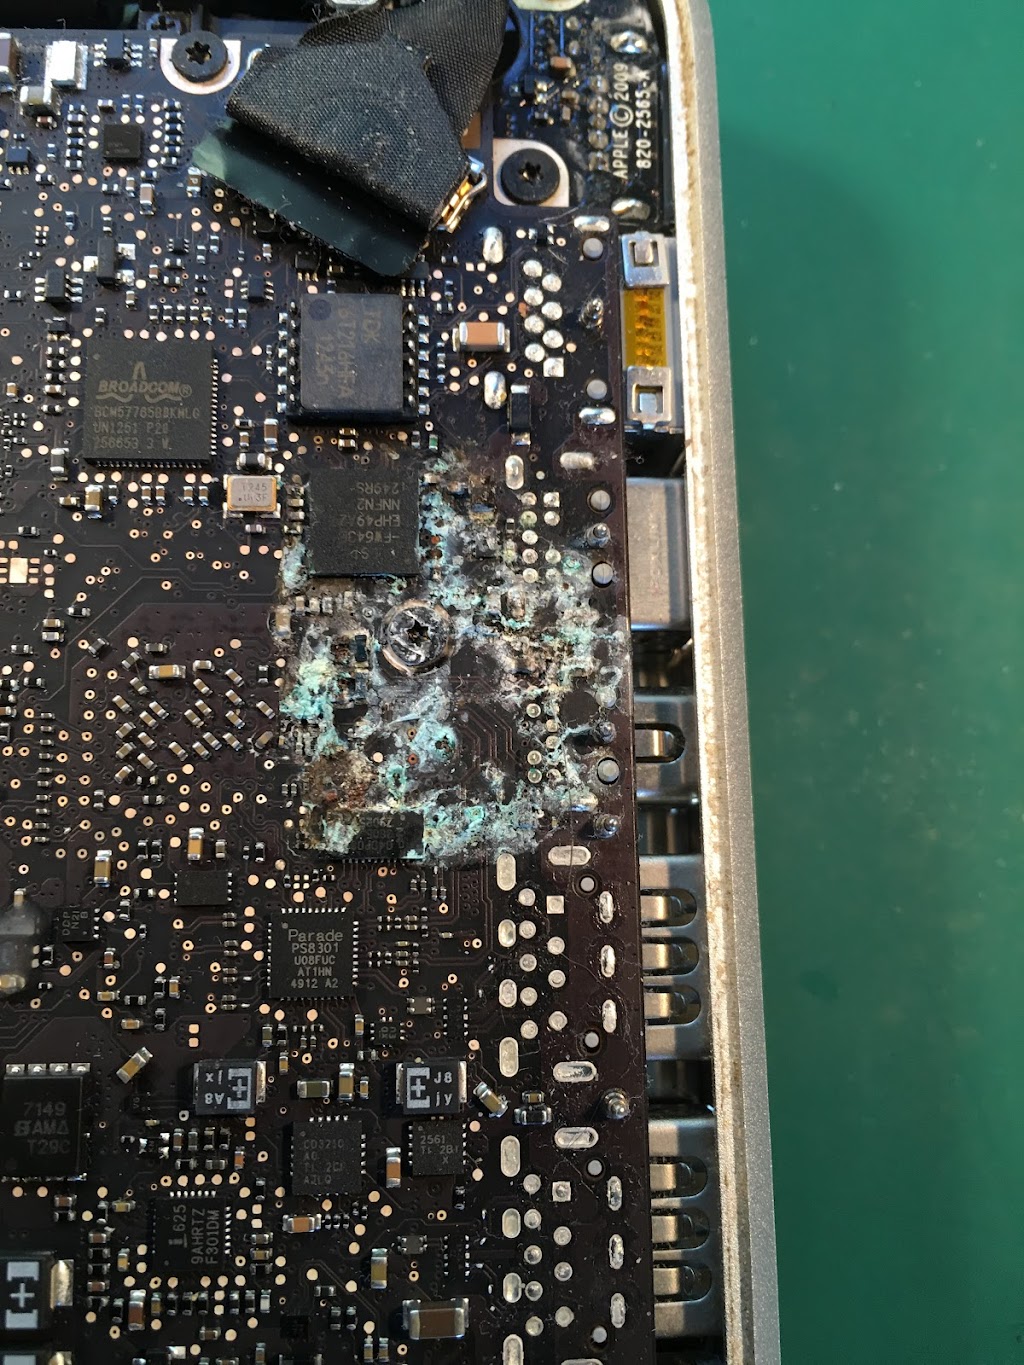 Macman Computer Repairs | 59 Tansey Dr, Tanah Merah QLD 4128, Australia | Phone: 0418 602 048